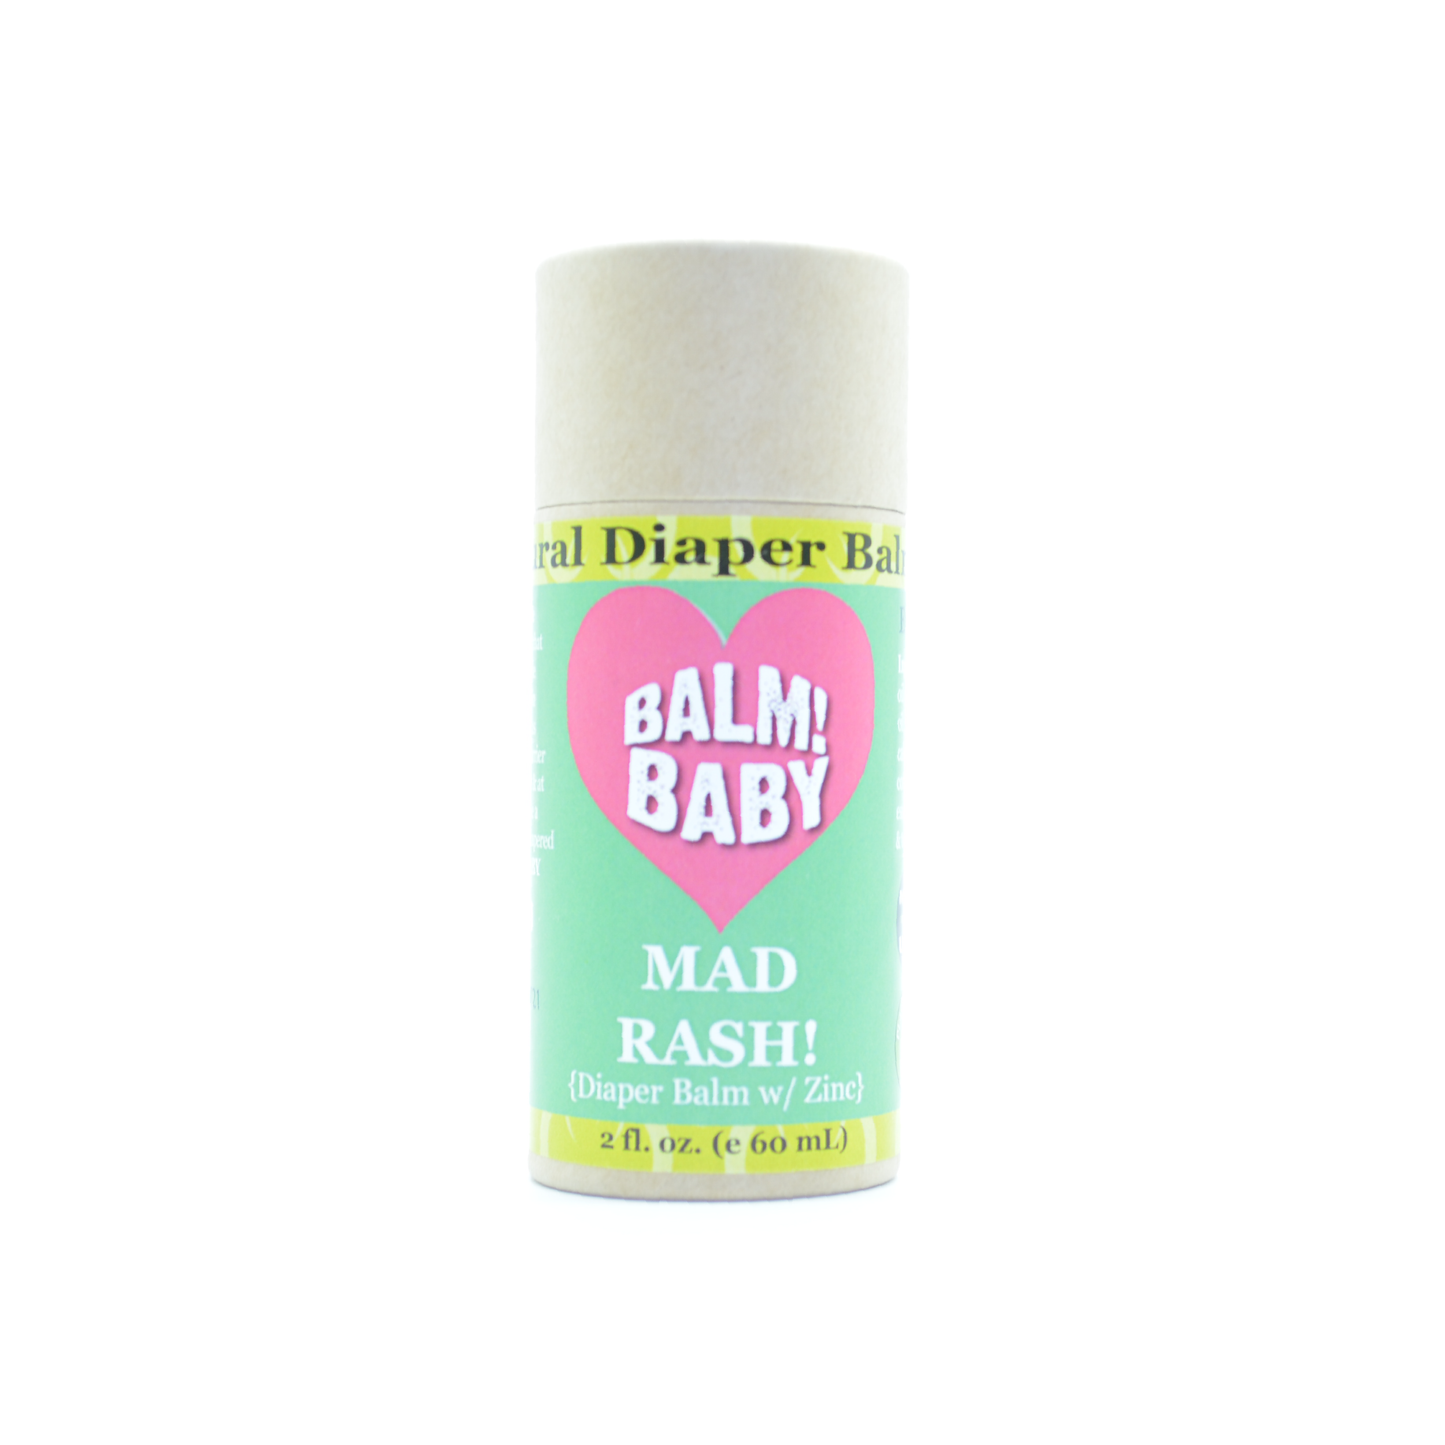 Taylor's Naturals - BALM! Baby - MAD RASH Diaper Balm Eco Stick